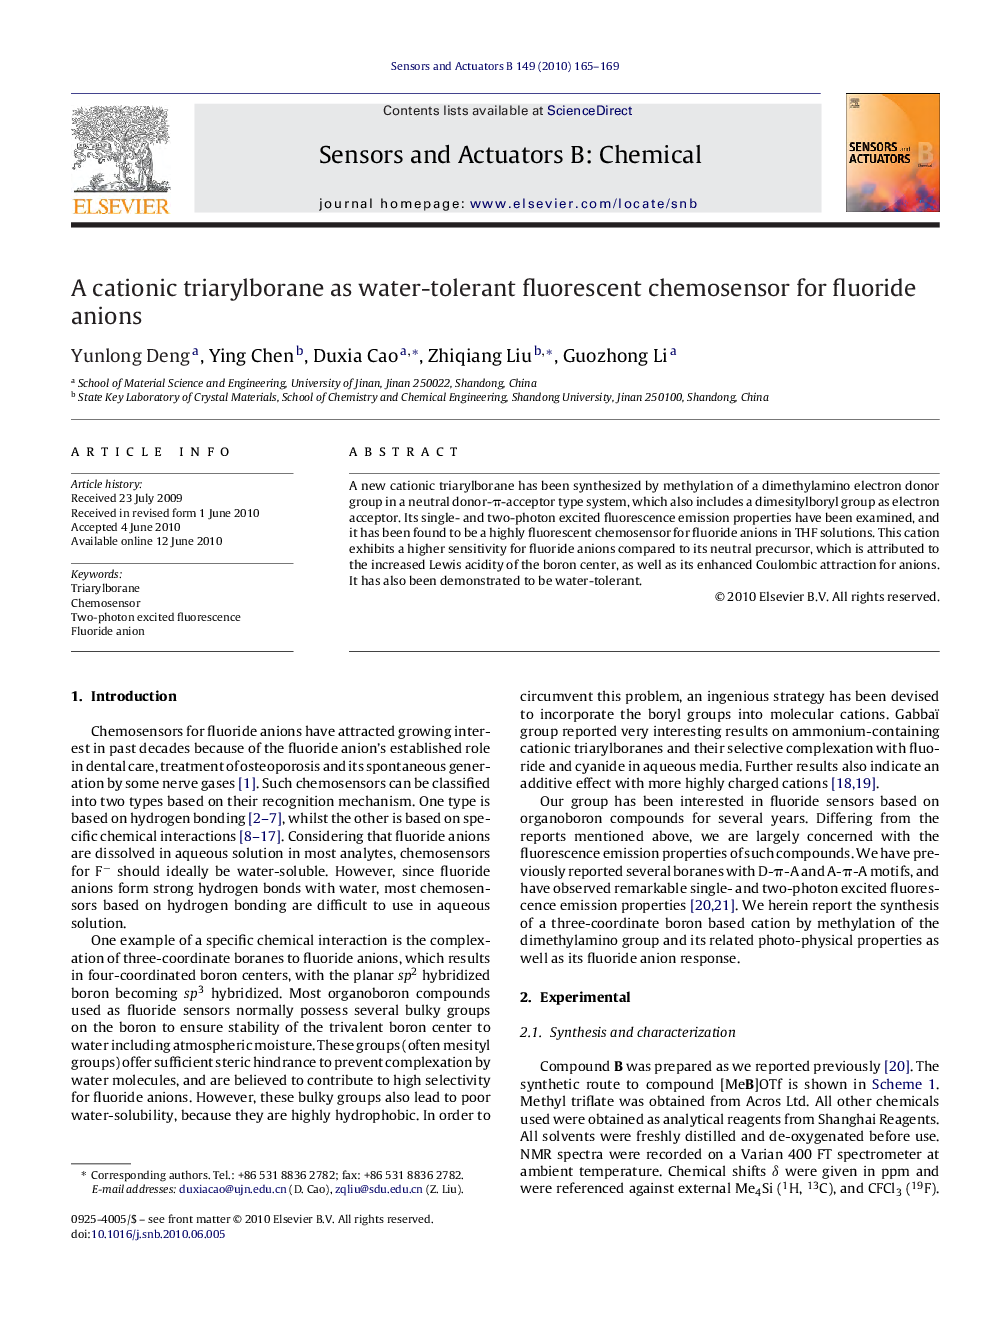 A cationic triarylborane as water-tolerant fluorescent chemosensor for fluoride anions